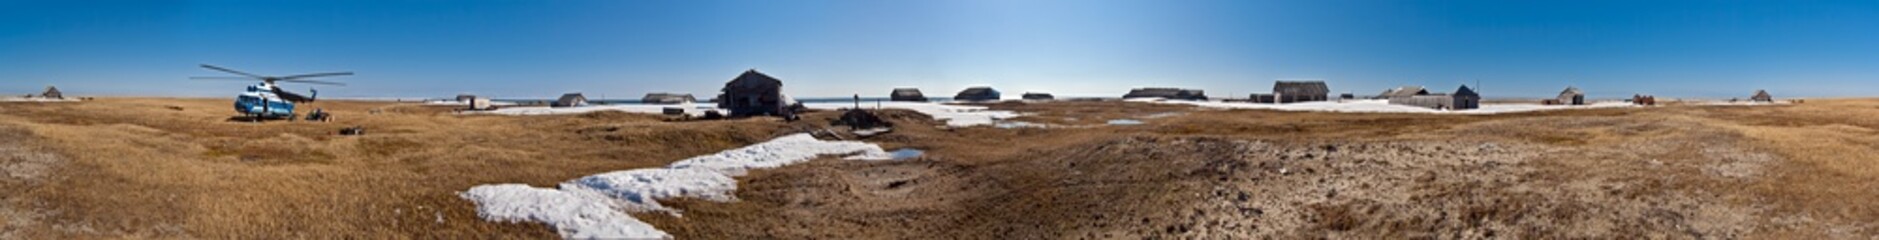 Abandoned Tobseda village and its surroundings, Barents Sea coastal area, Russia